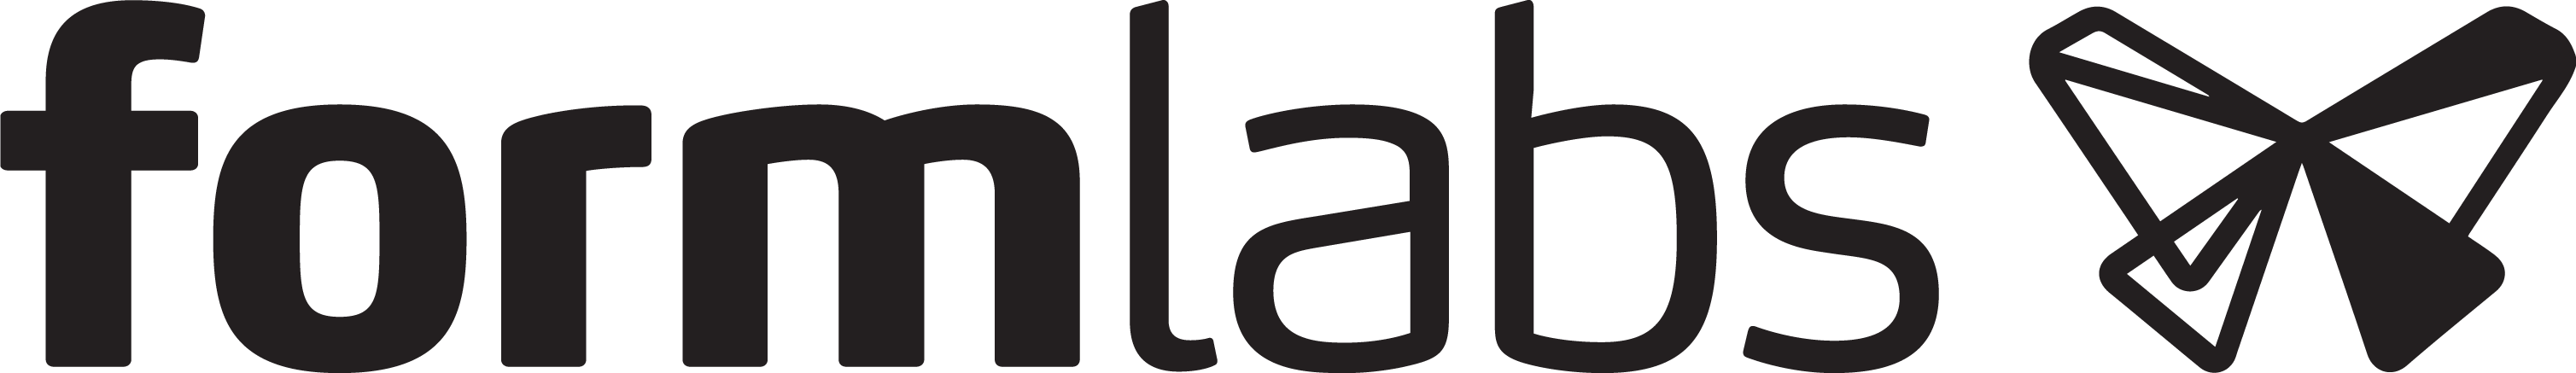 Logo Formlabs